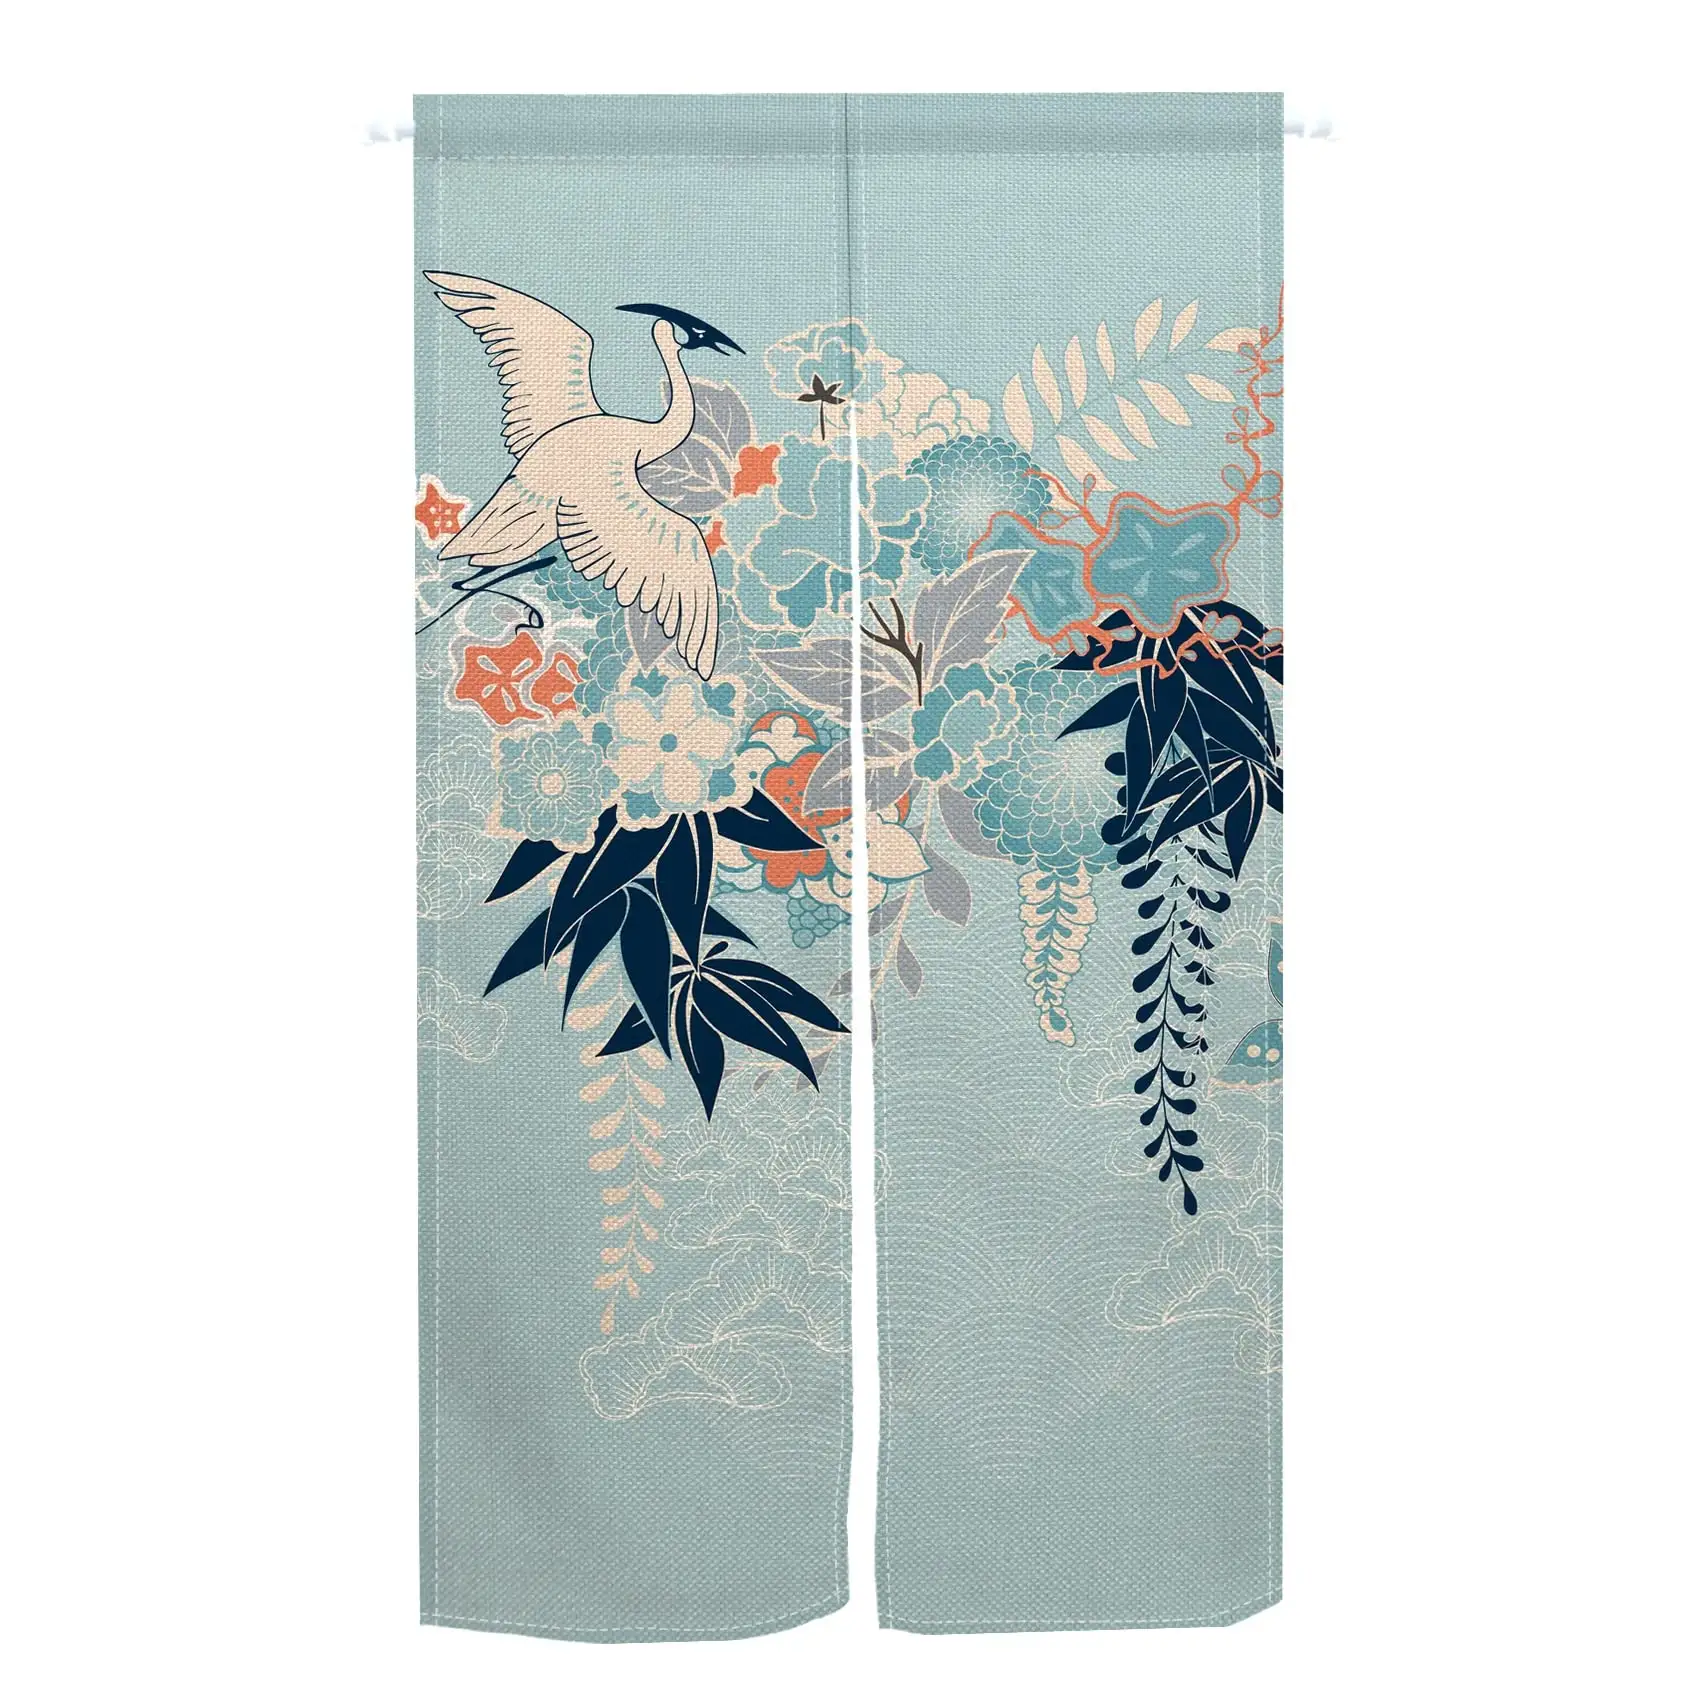 Hogar decorativo cocina tradicional estilo largo 33,5 "x 55" 85x150cm algodón Lino japonés Noren puerta cortina